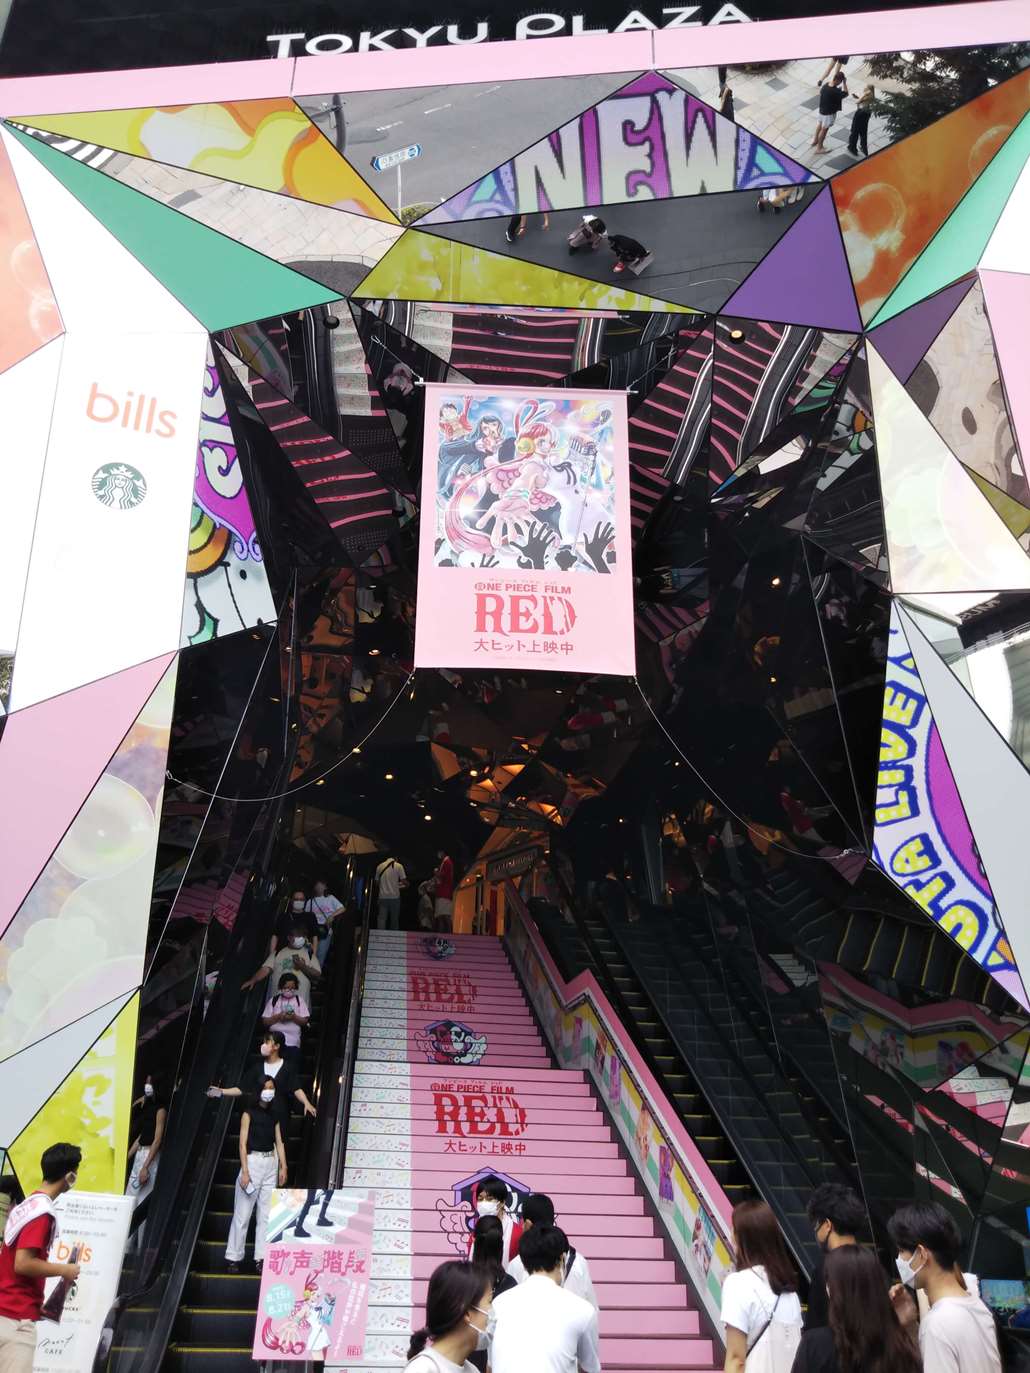 TOKYU PLAZEに吊るされたONE PIECE FILM REDのポスターと階段での宣伝